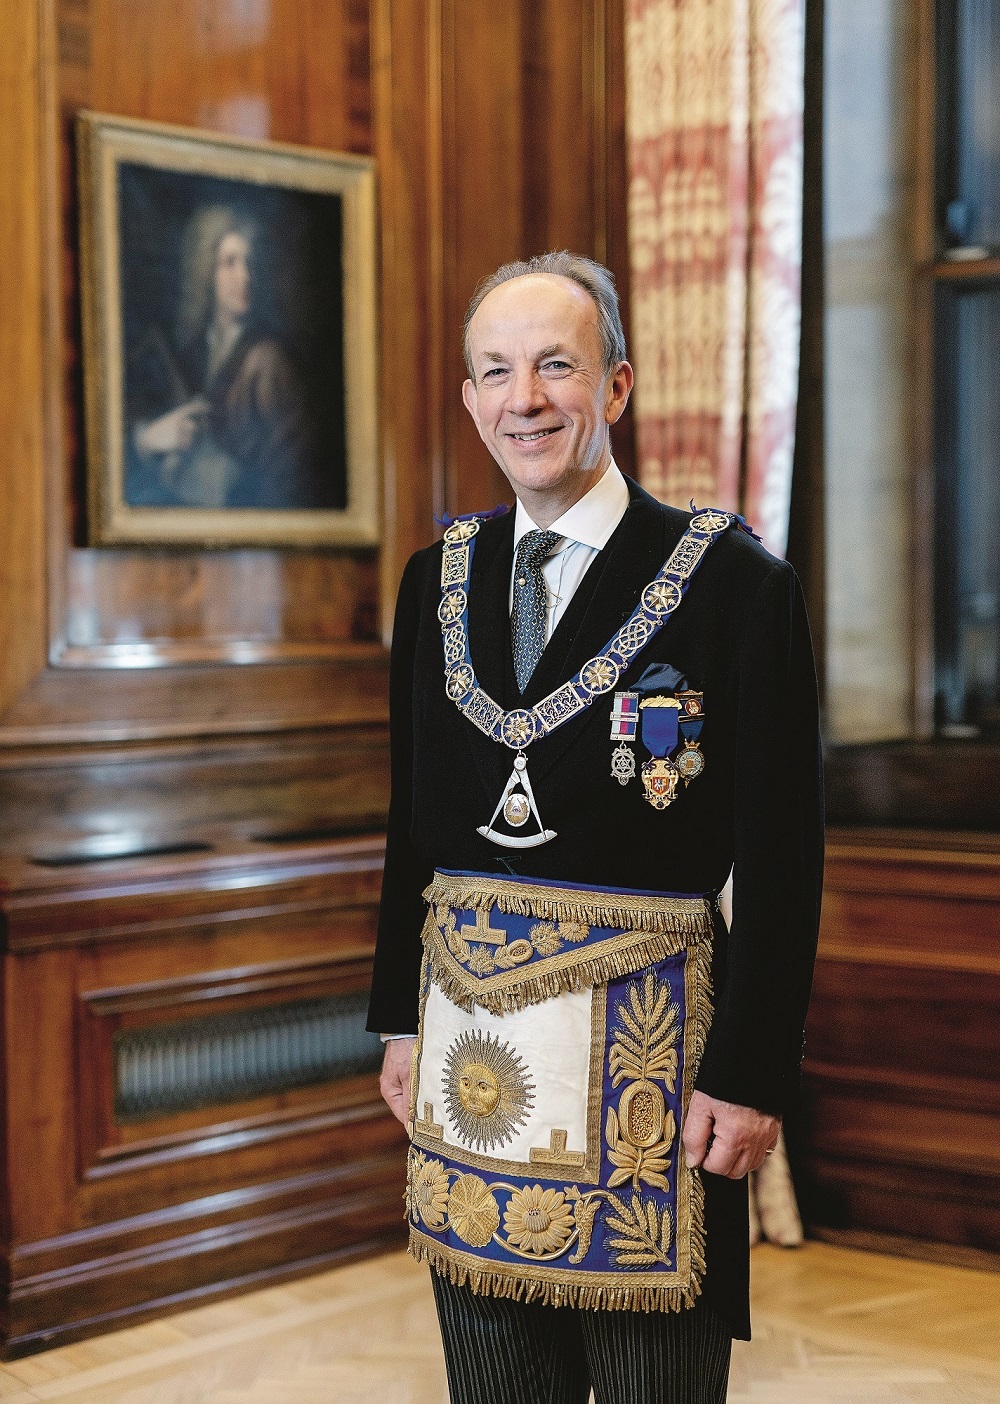 Jonathan Spence, Pro Grand Master of the United Grand Lodge of England, wearing his Masonic Regalia